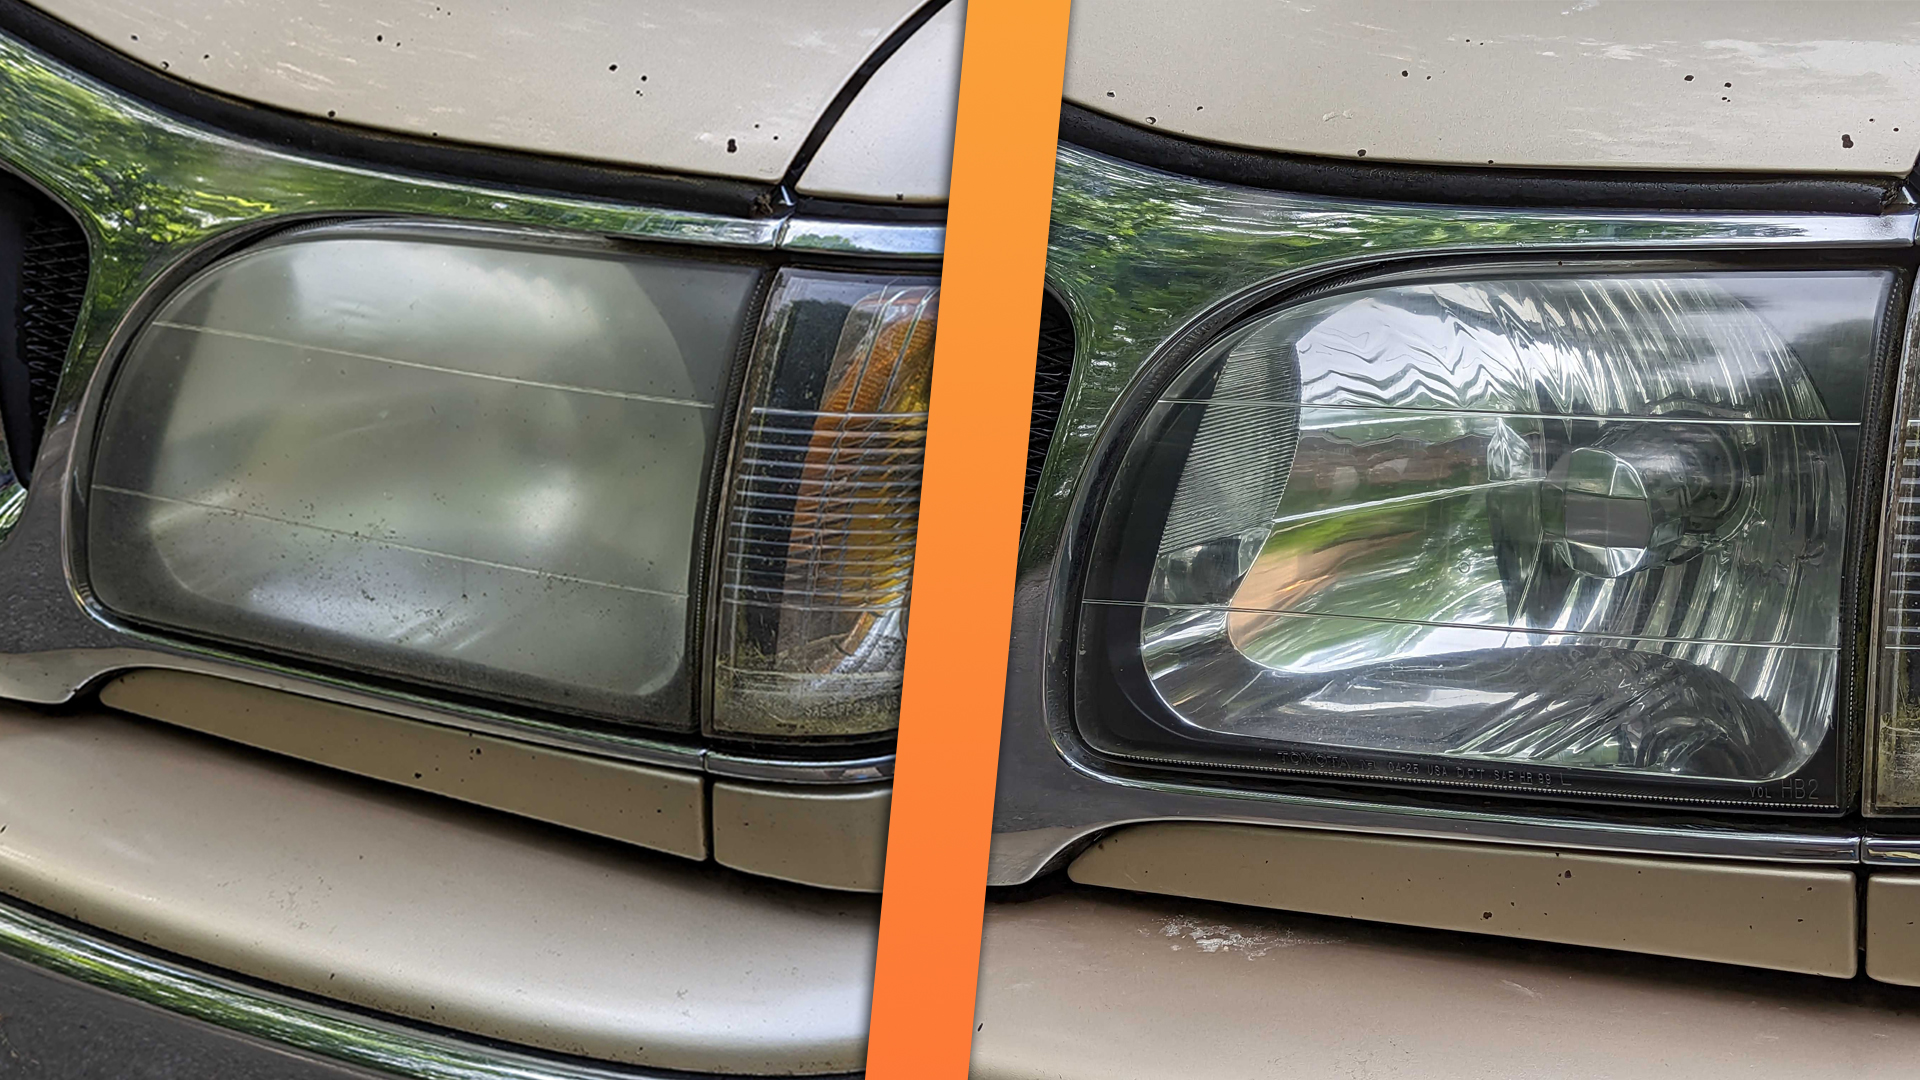 Polishing Headlights With Rain-X's X-Treme Clean. Did It work? 